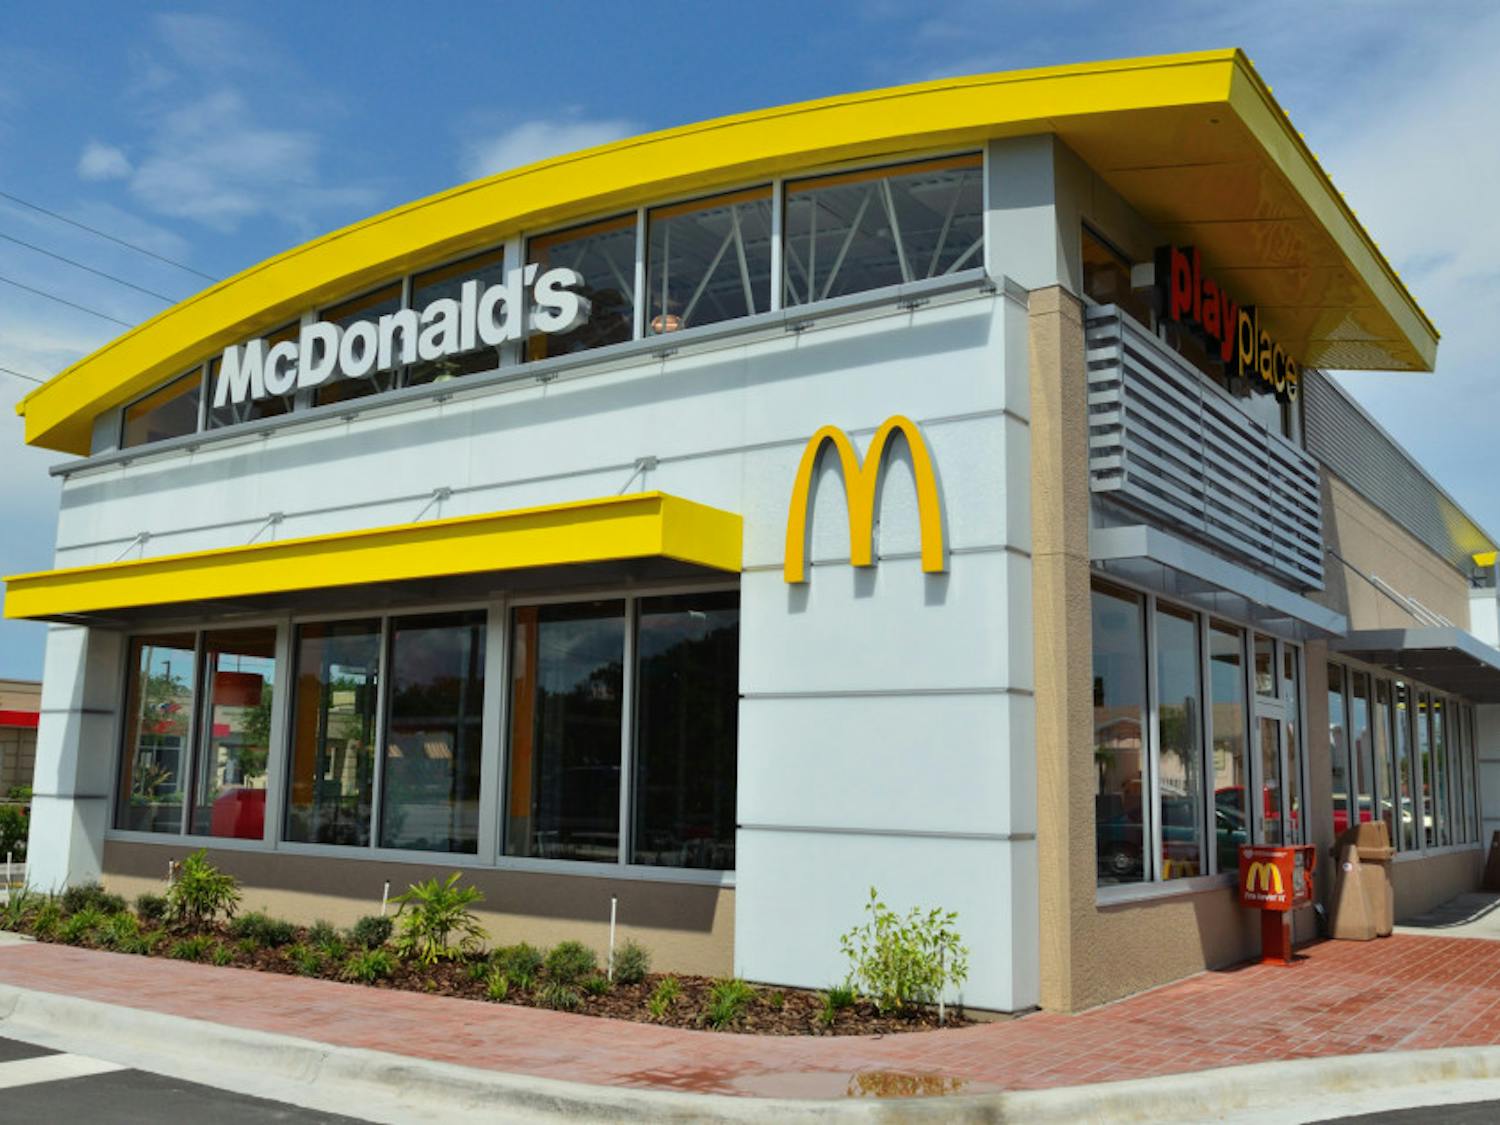 Pictured: A McDonald's restaurant in St. Petersburg, FL. 